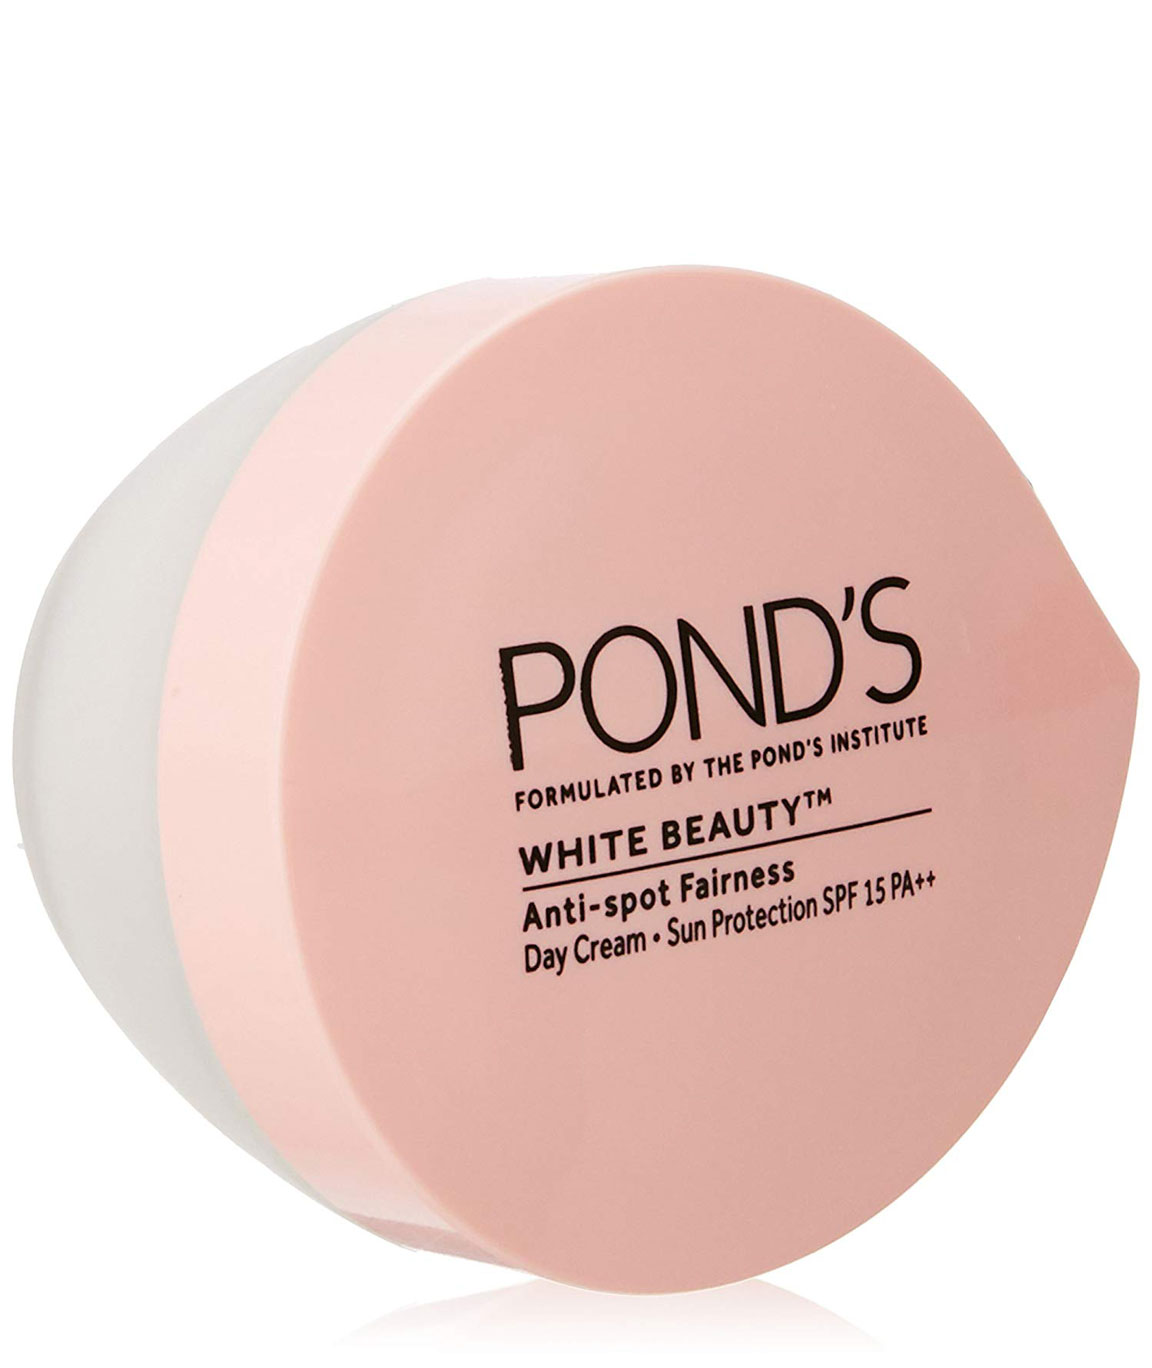 PONDS White Beauty Anti-Spot Fairness SPF 15 Day Cream, 35gm